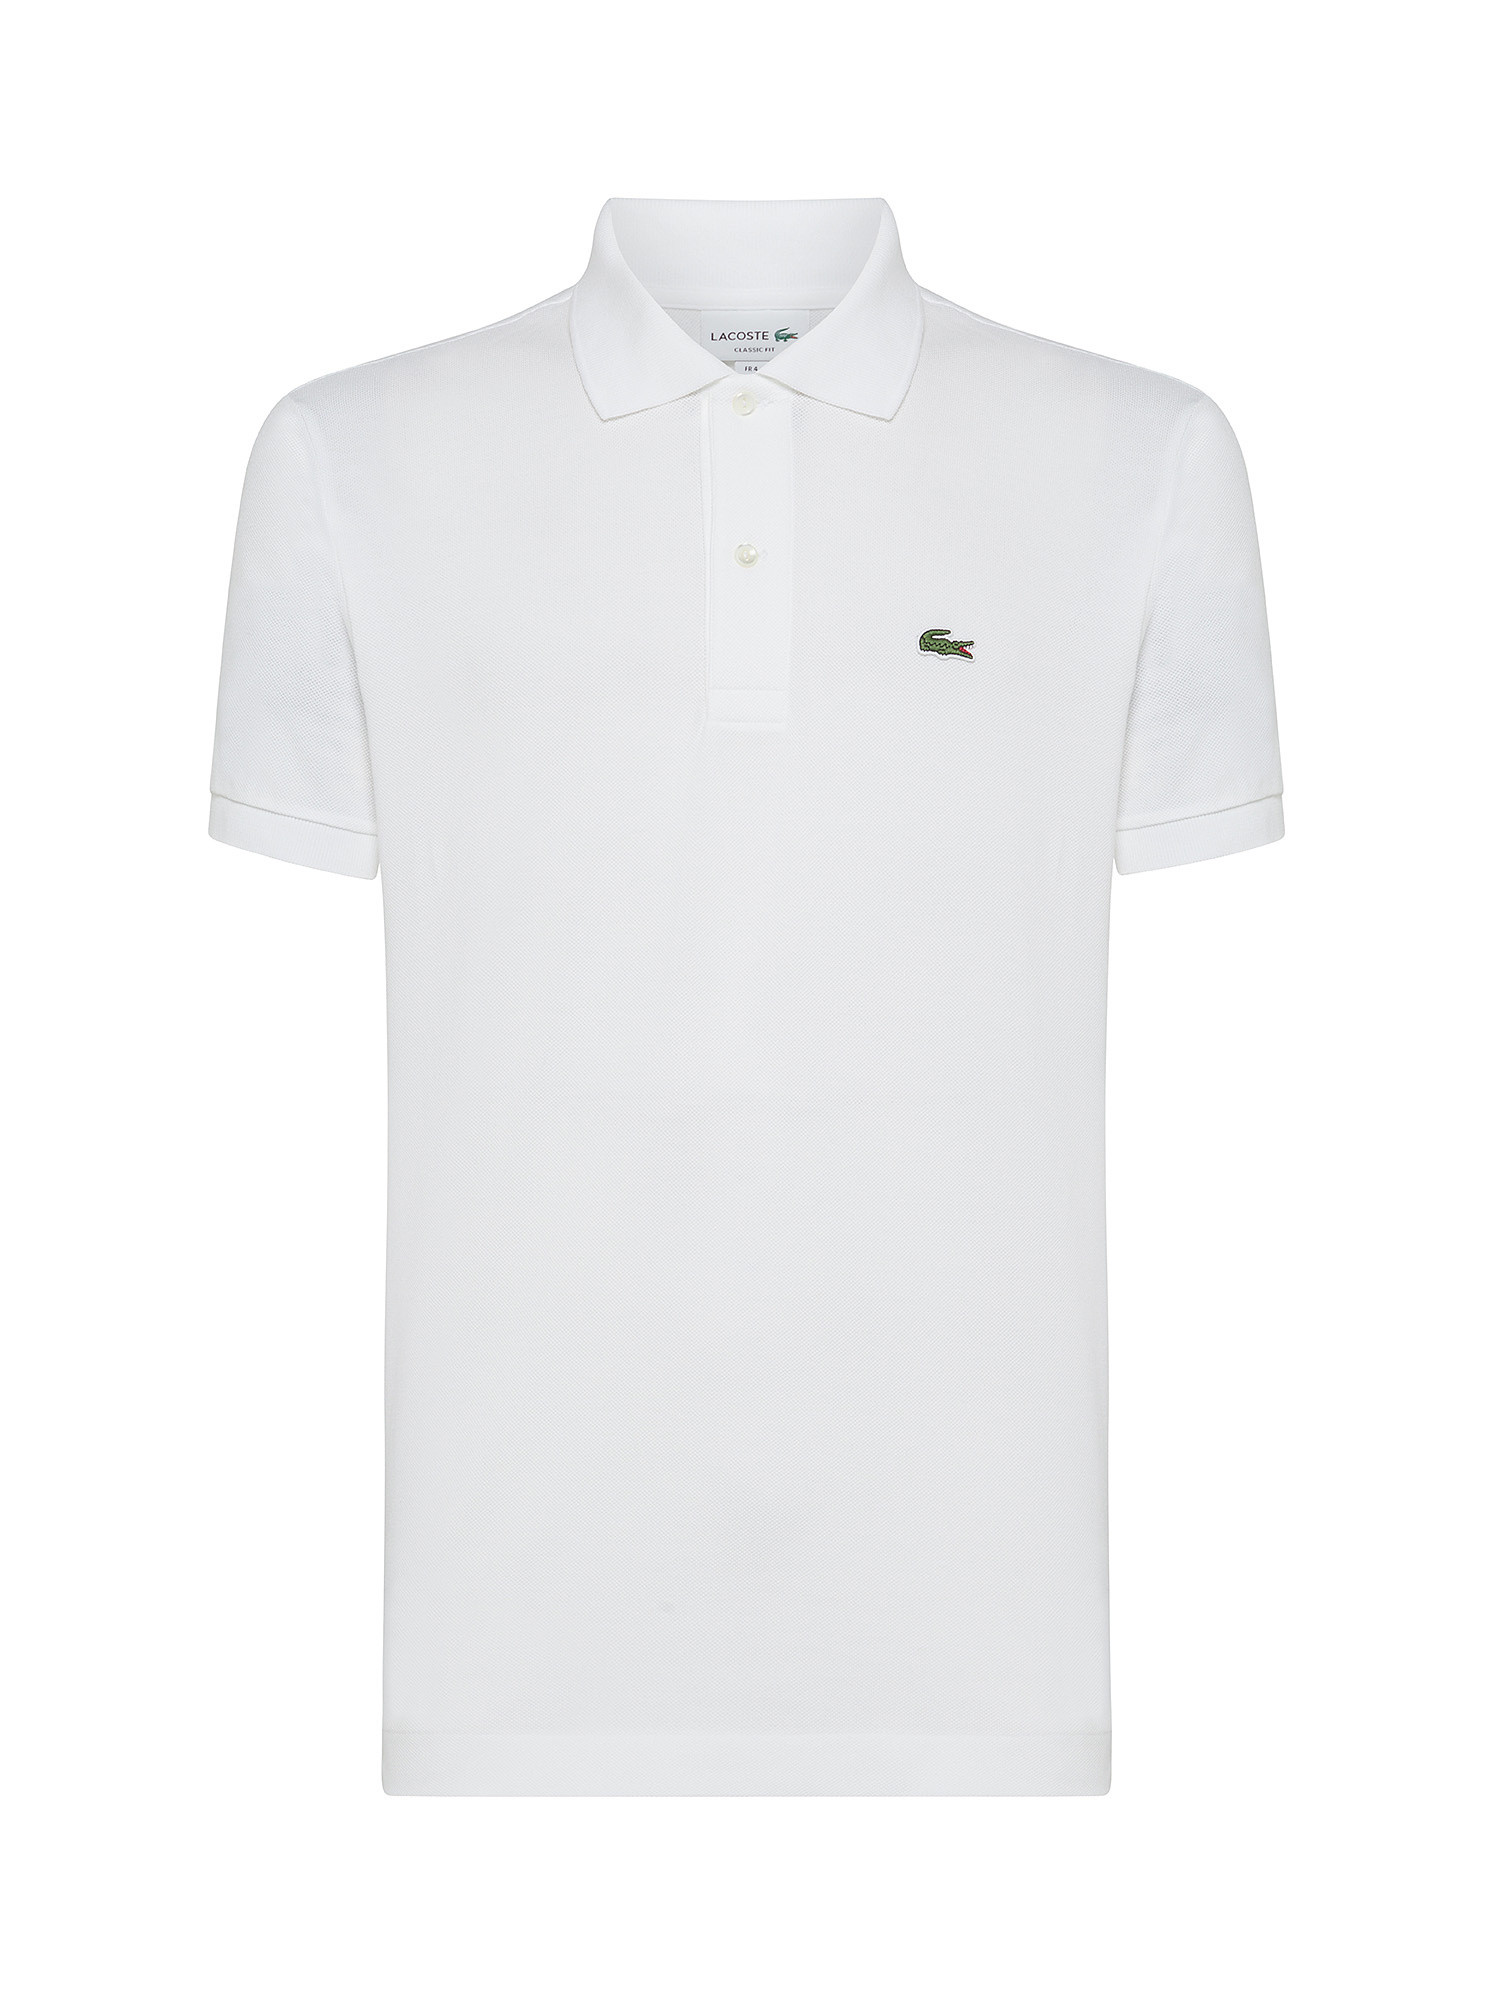 Lacoste - Classic cut polo shirt in petit piquè cotton, White, large image number 0